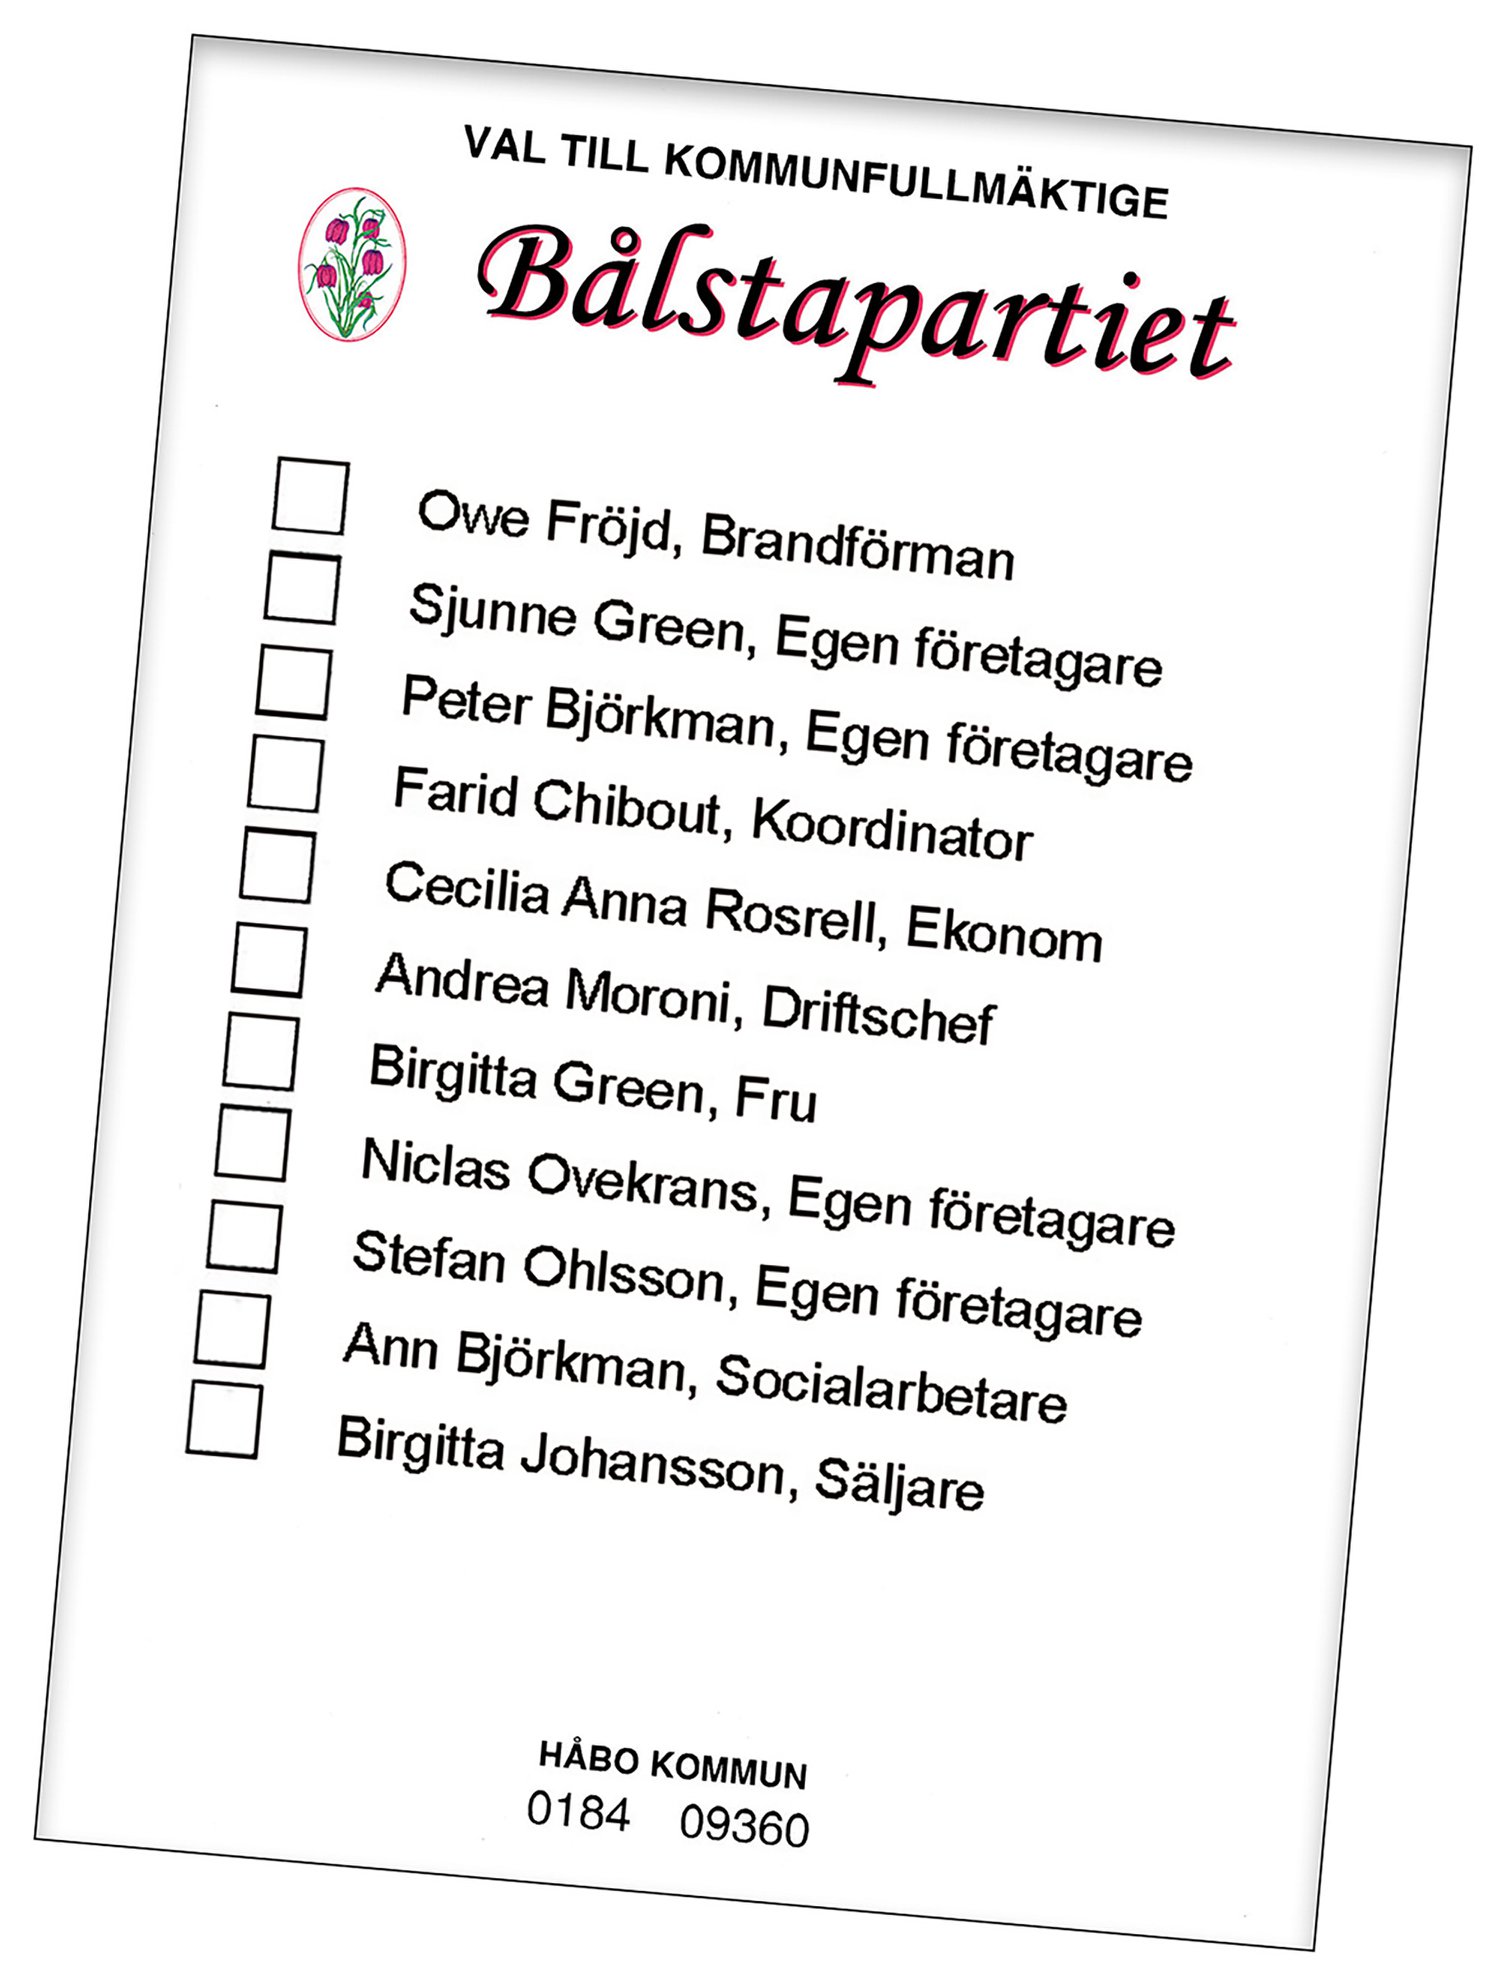 Balstapartiet Valmanifest 2018